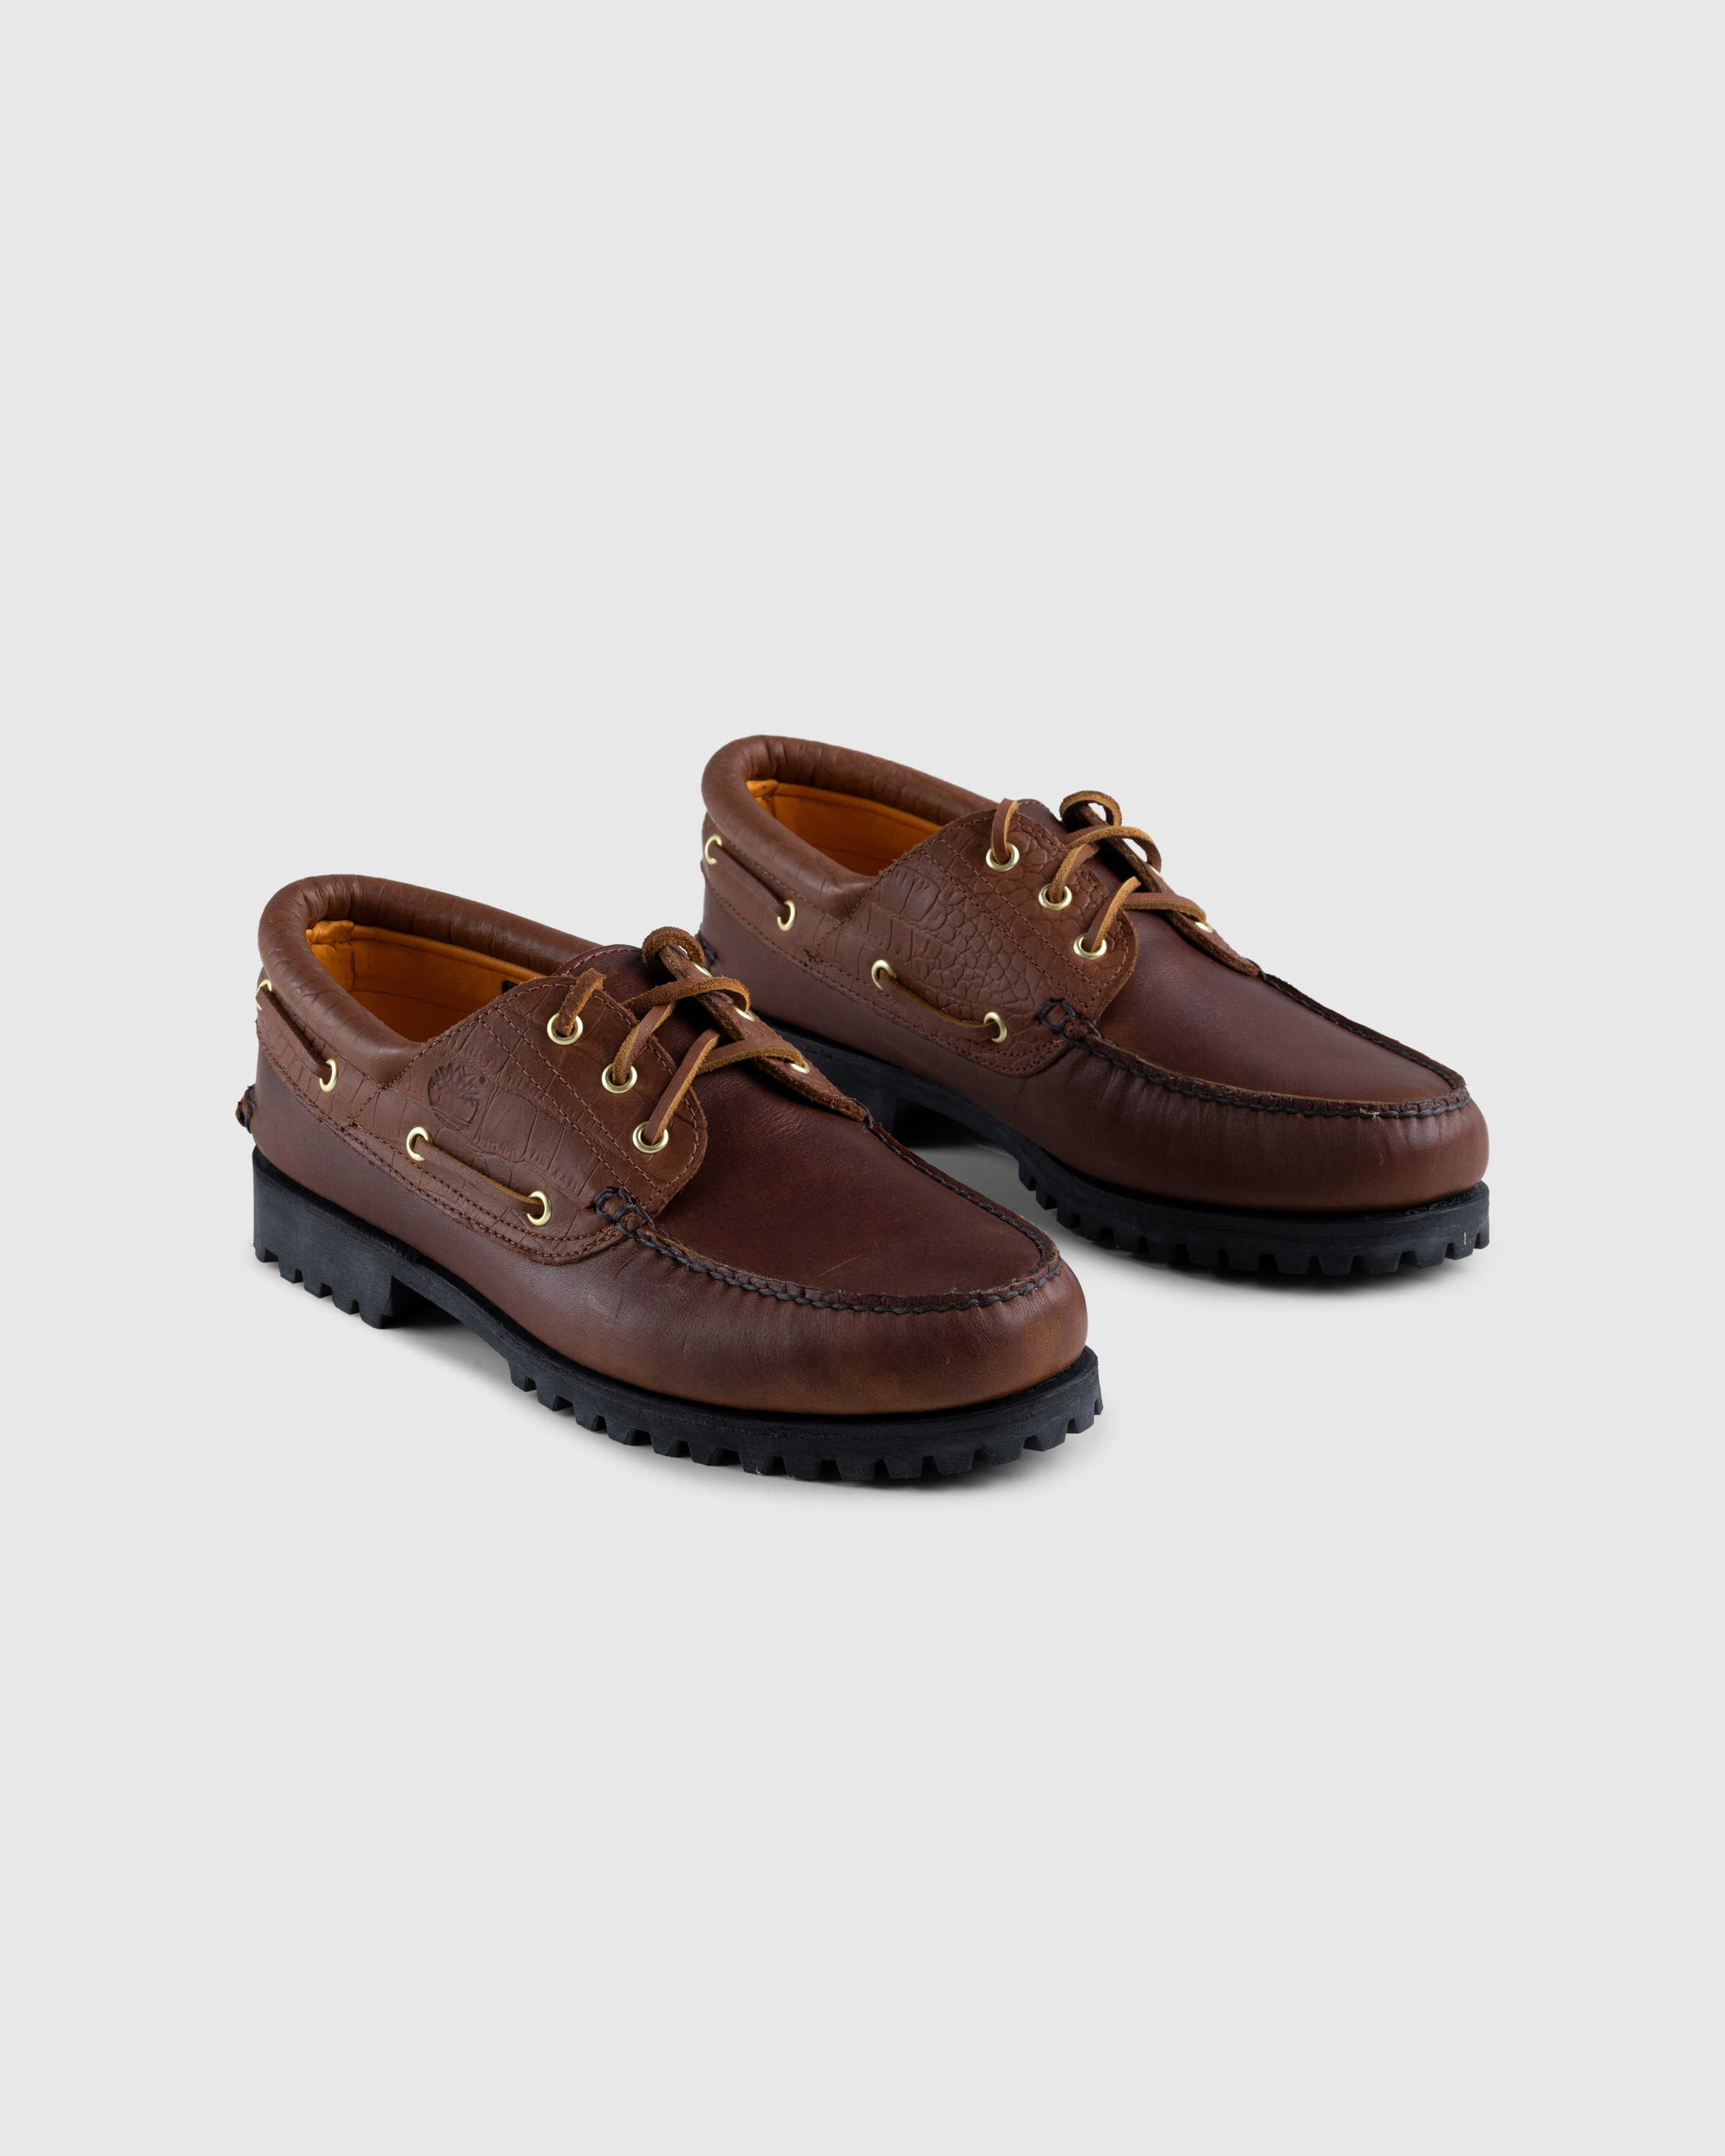 Timberland - Authentics 3 Eye Classic Lug Wheat - Footwear - Brown - Image 3